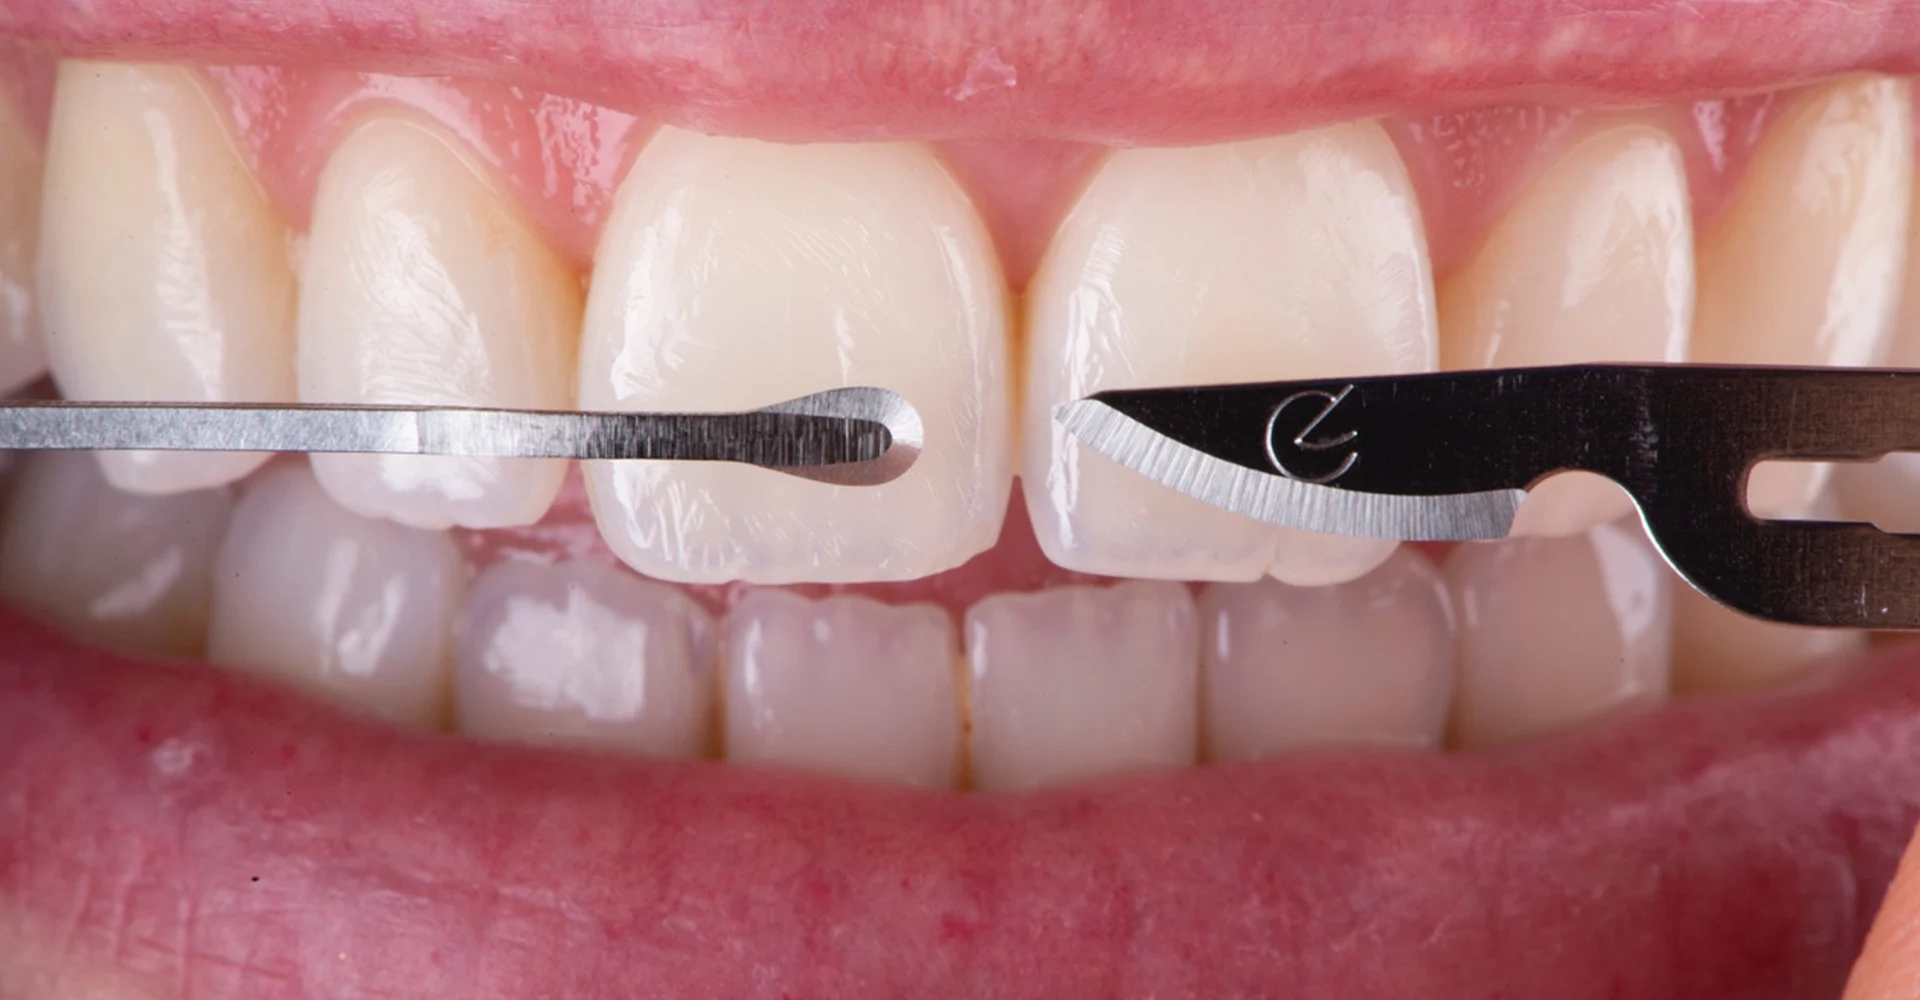 Microcirugía plástica periodontal estética